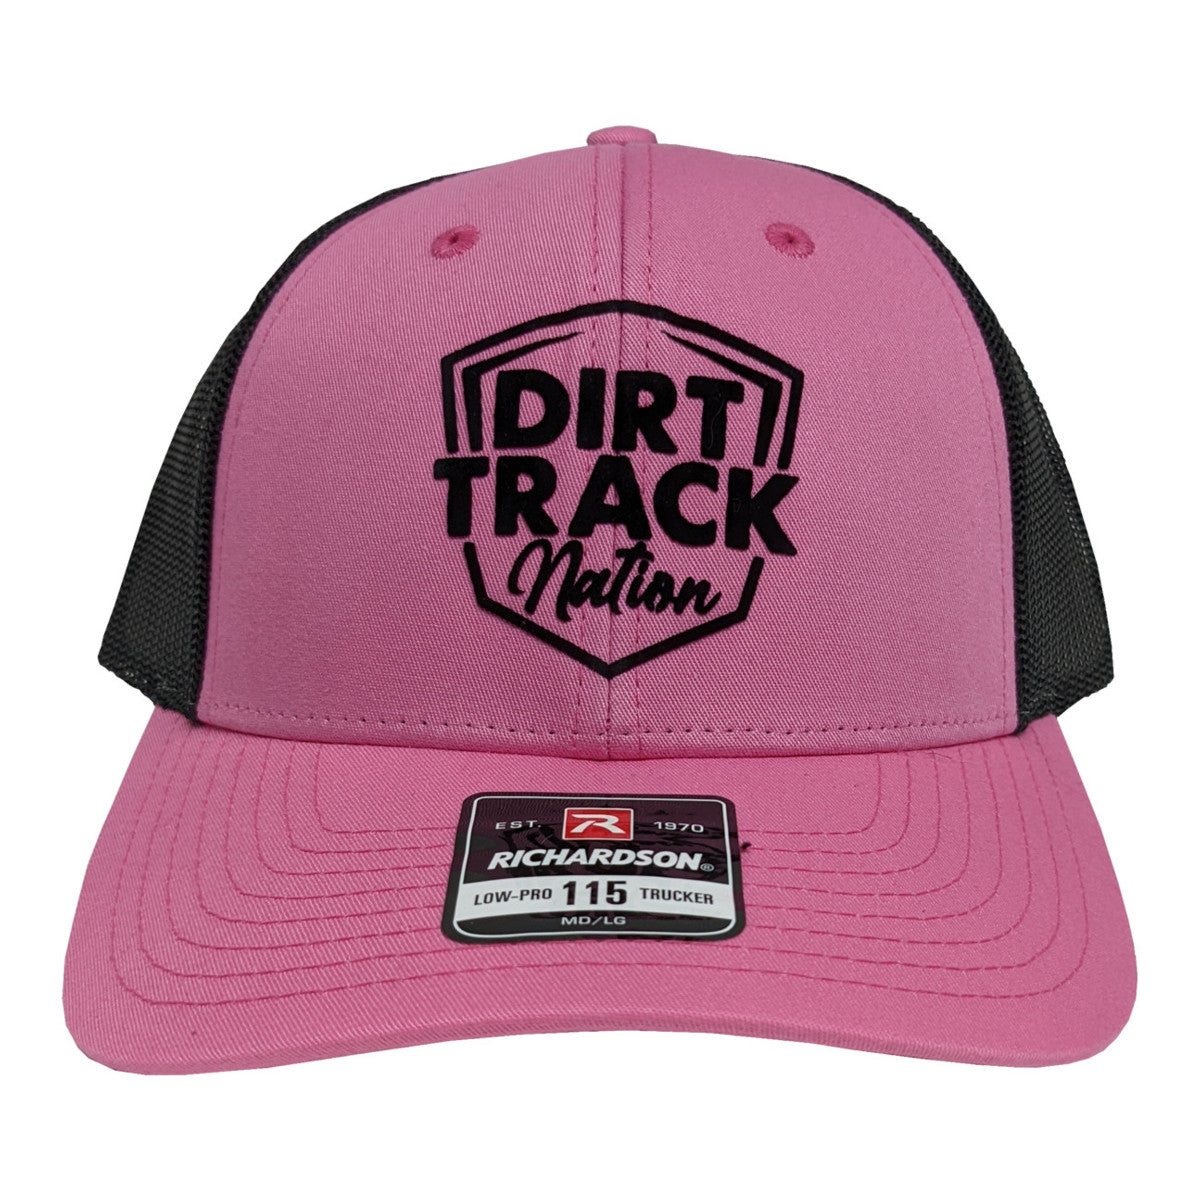 Dirt Track Nation Pink w/ Black Mesh Hat